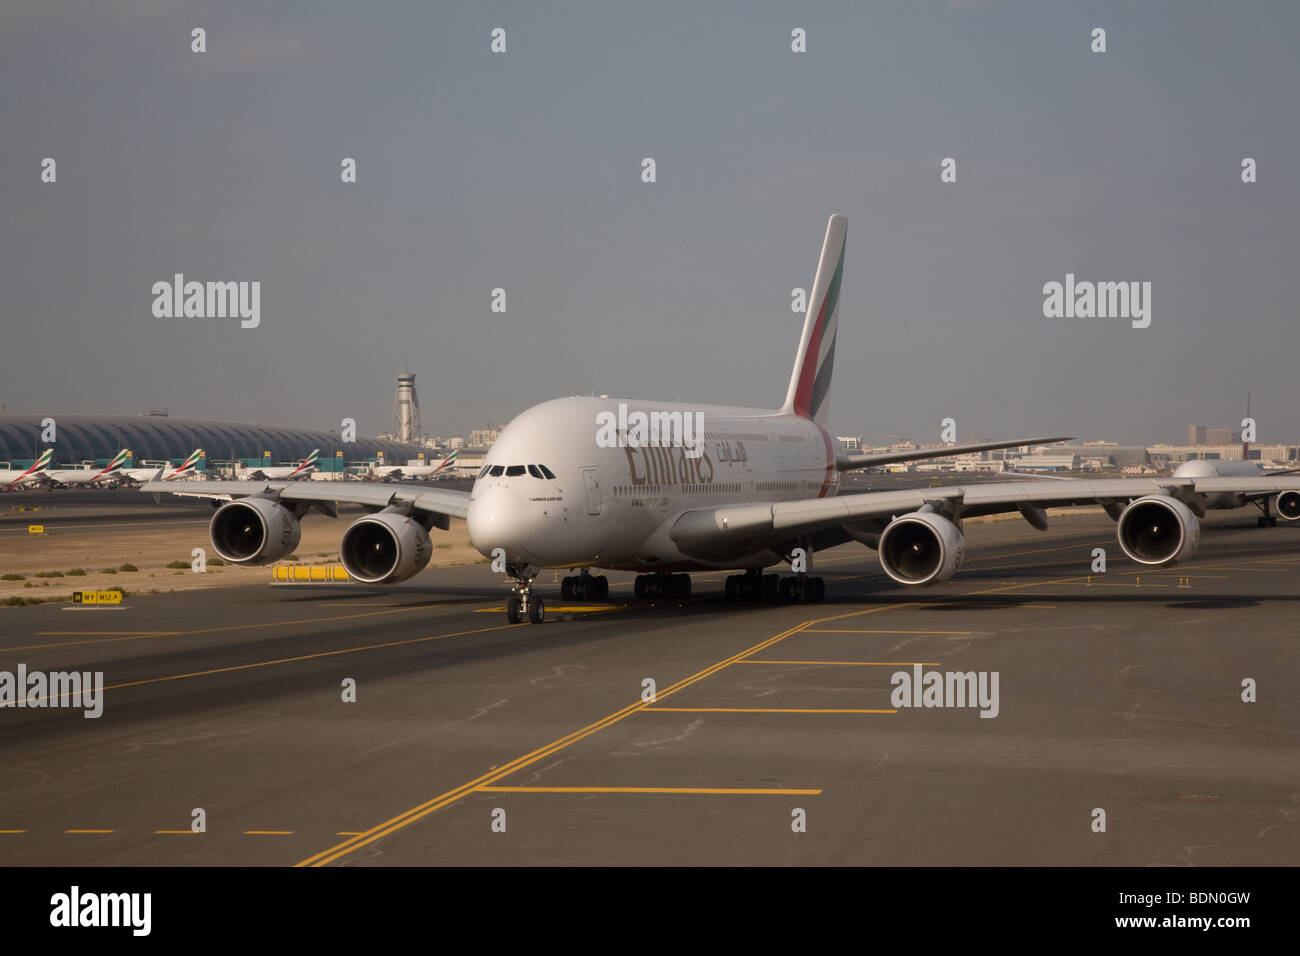 Emirates Airline Airbus A380 i jumbo jet rullaggio Foto Stock